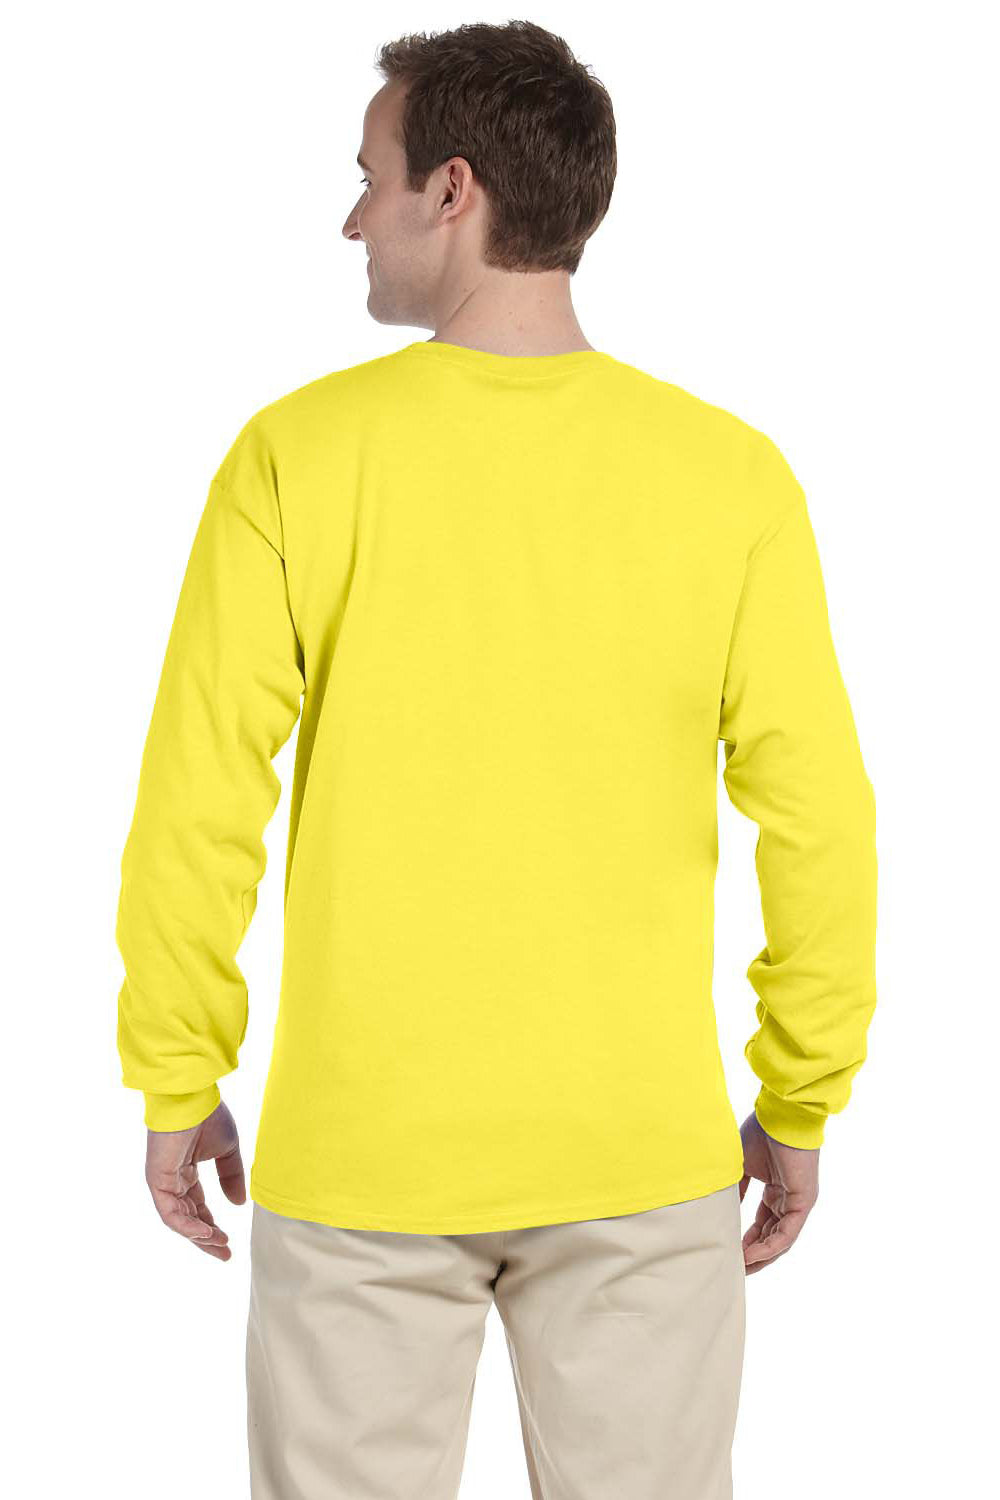 Fruit Of The Loom 4930 Mens HD Jersey Long Sleeve Crewneck T-Shirt Yellow Back